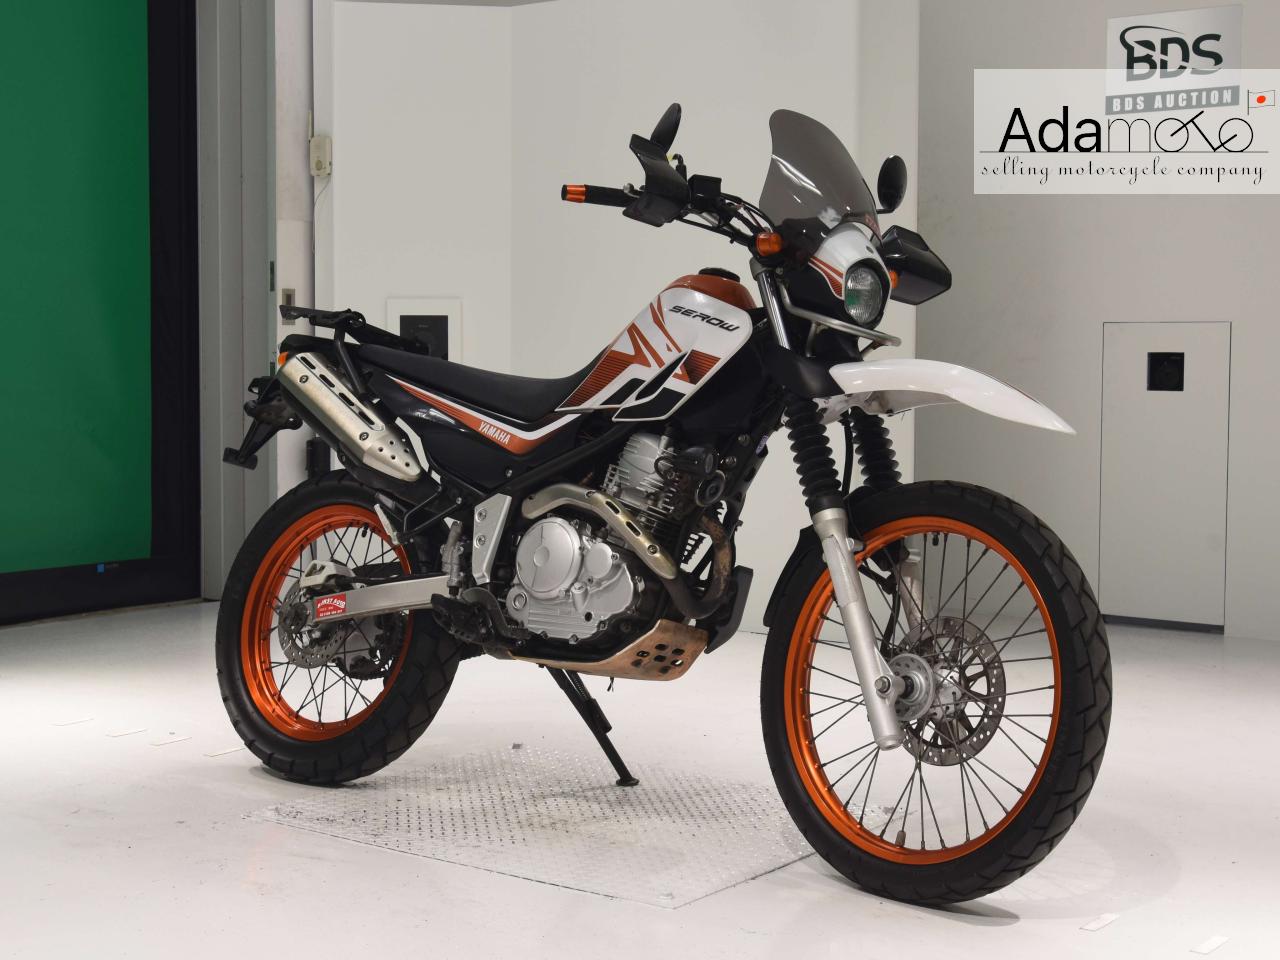 Yamaha SEROW250 3 - Adamoto - Motorcycles from Japan